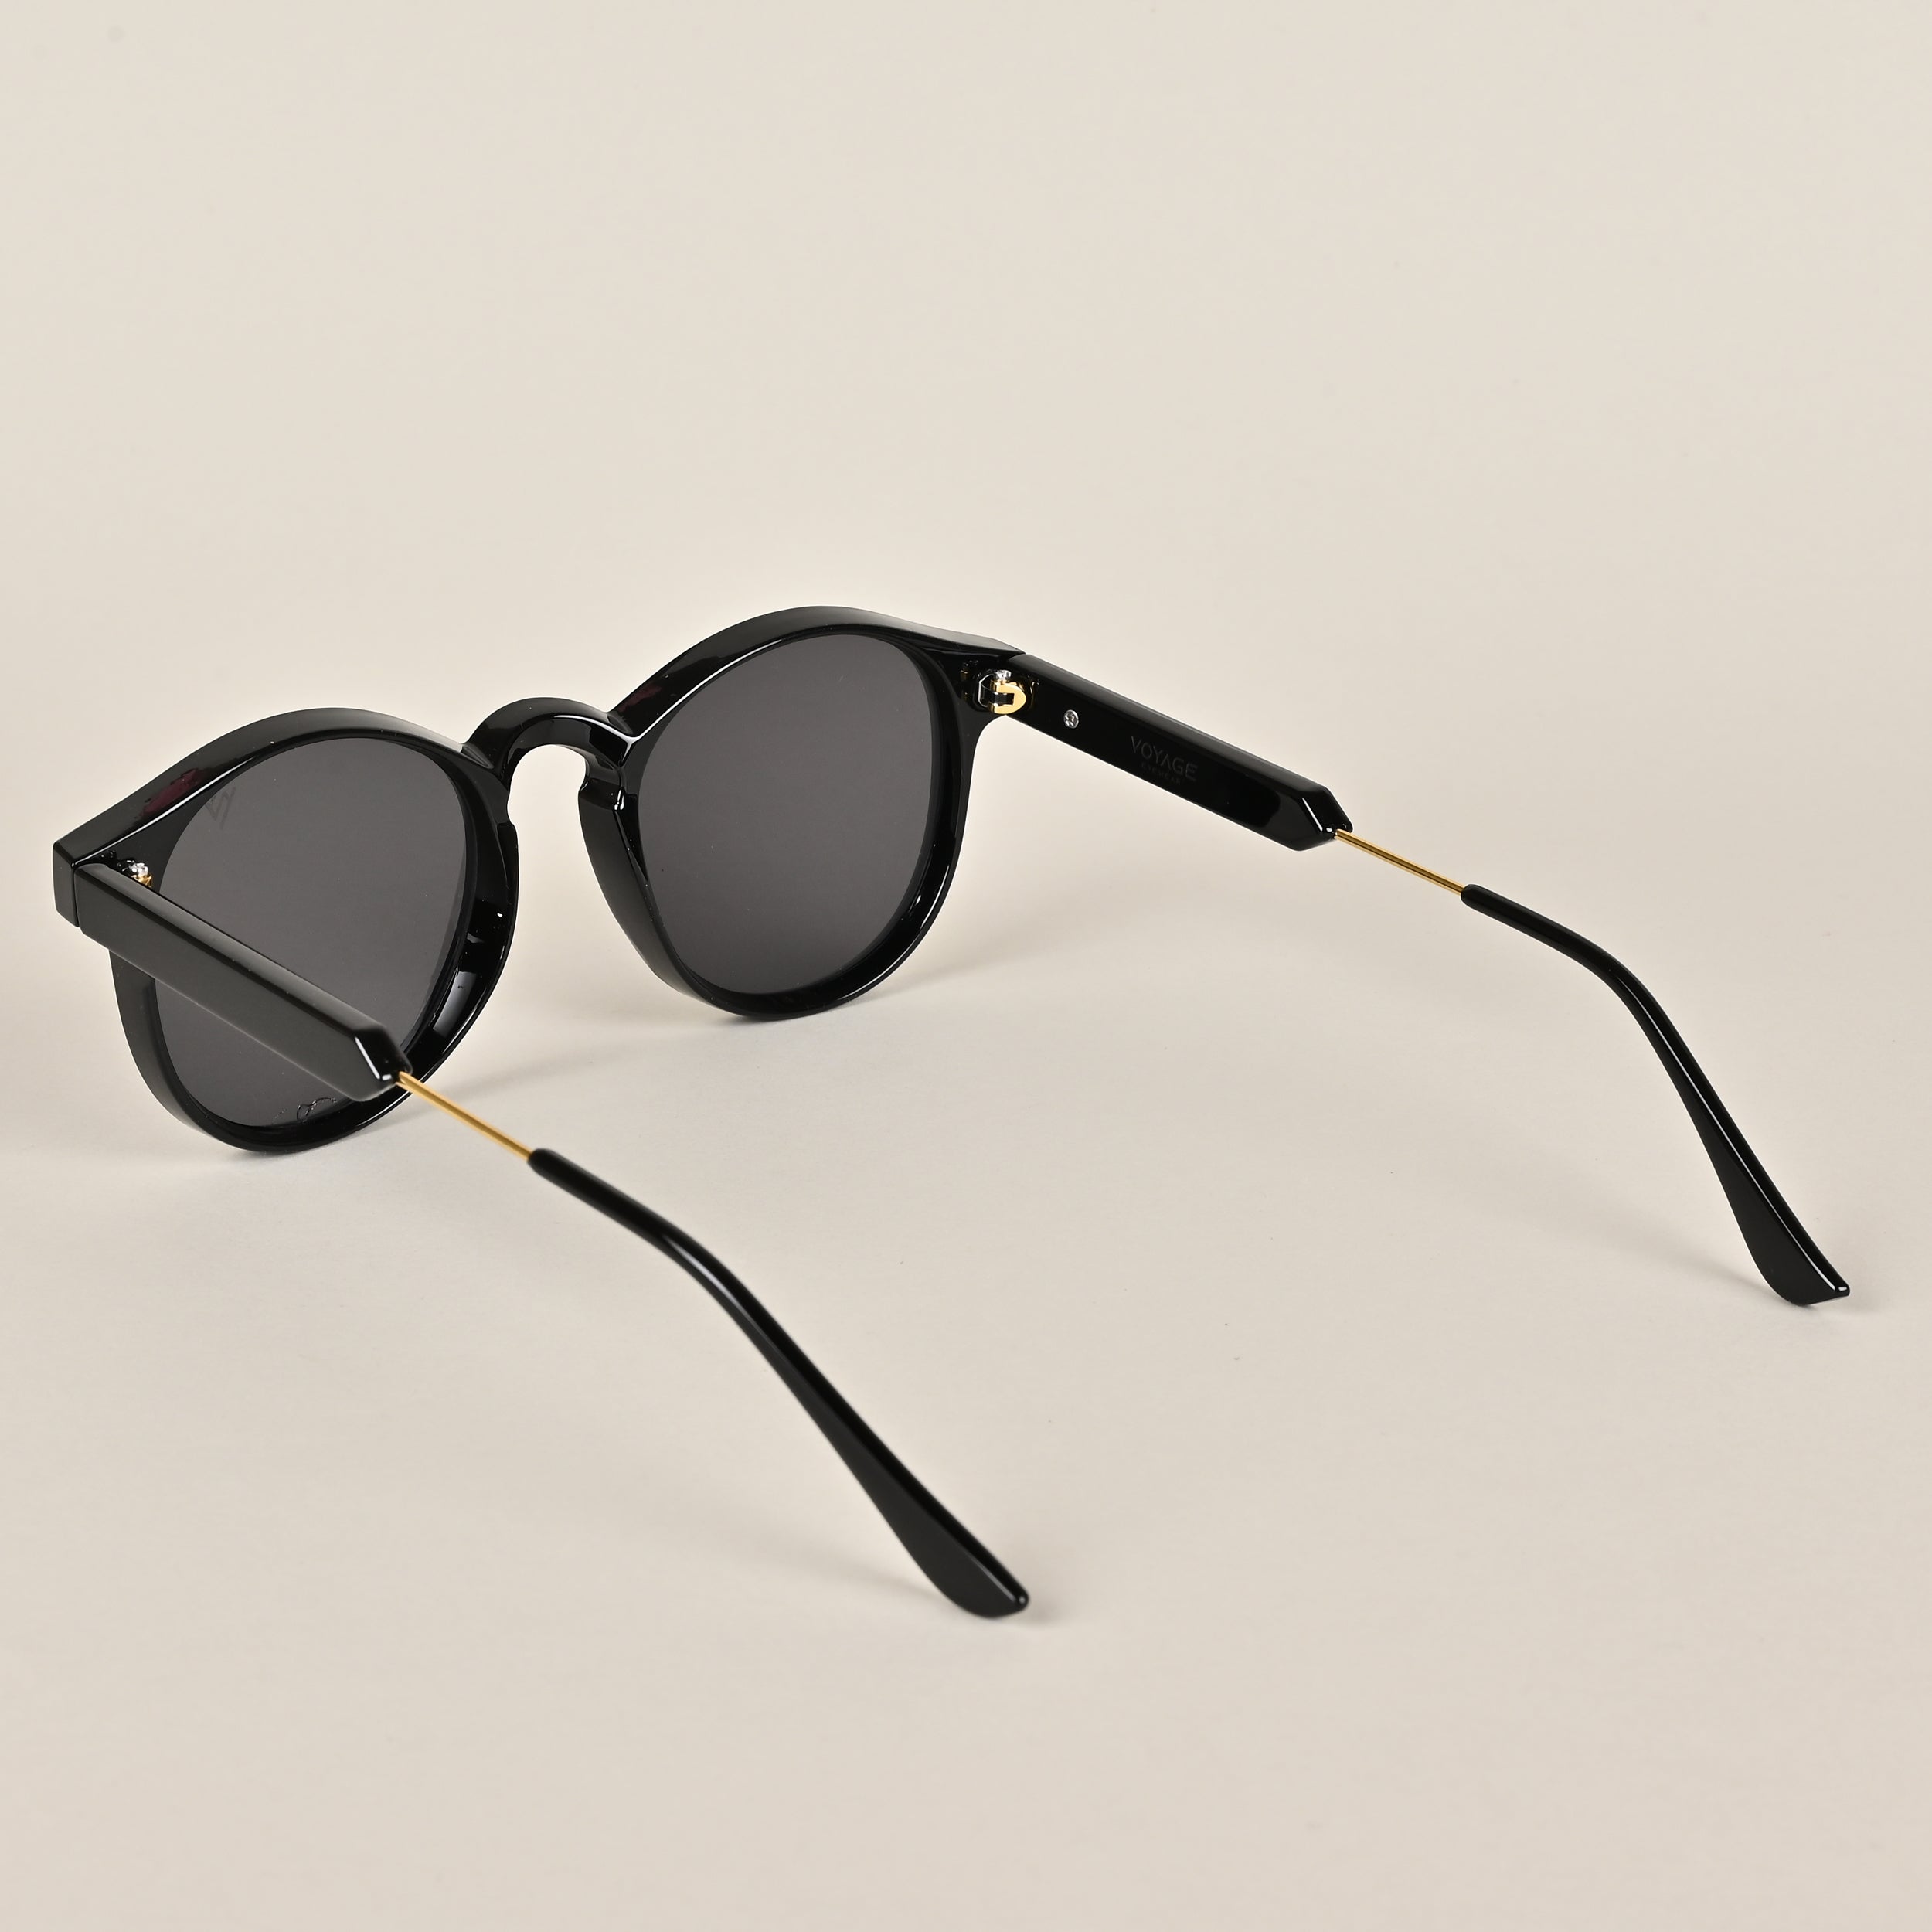 Voyage Black Round Sunglasses - MG3876